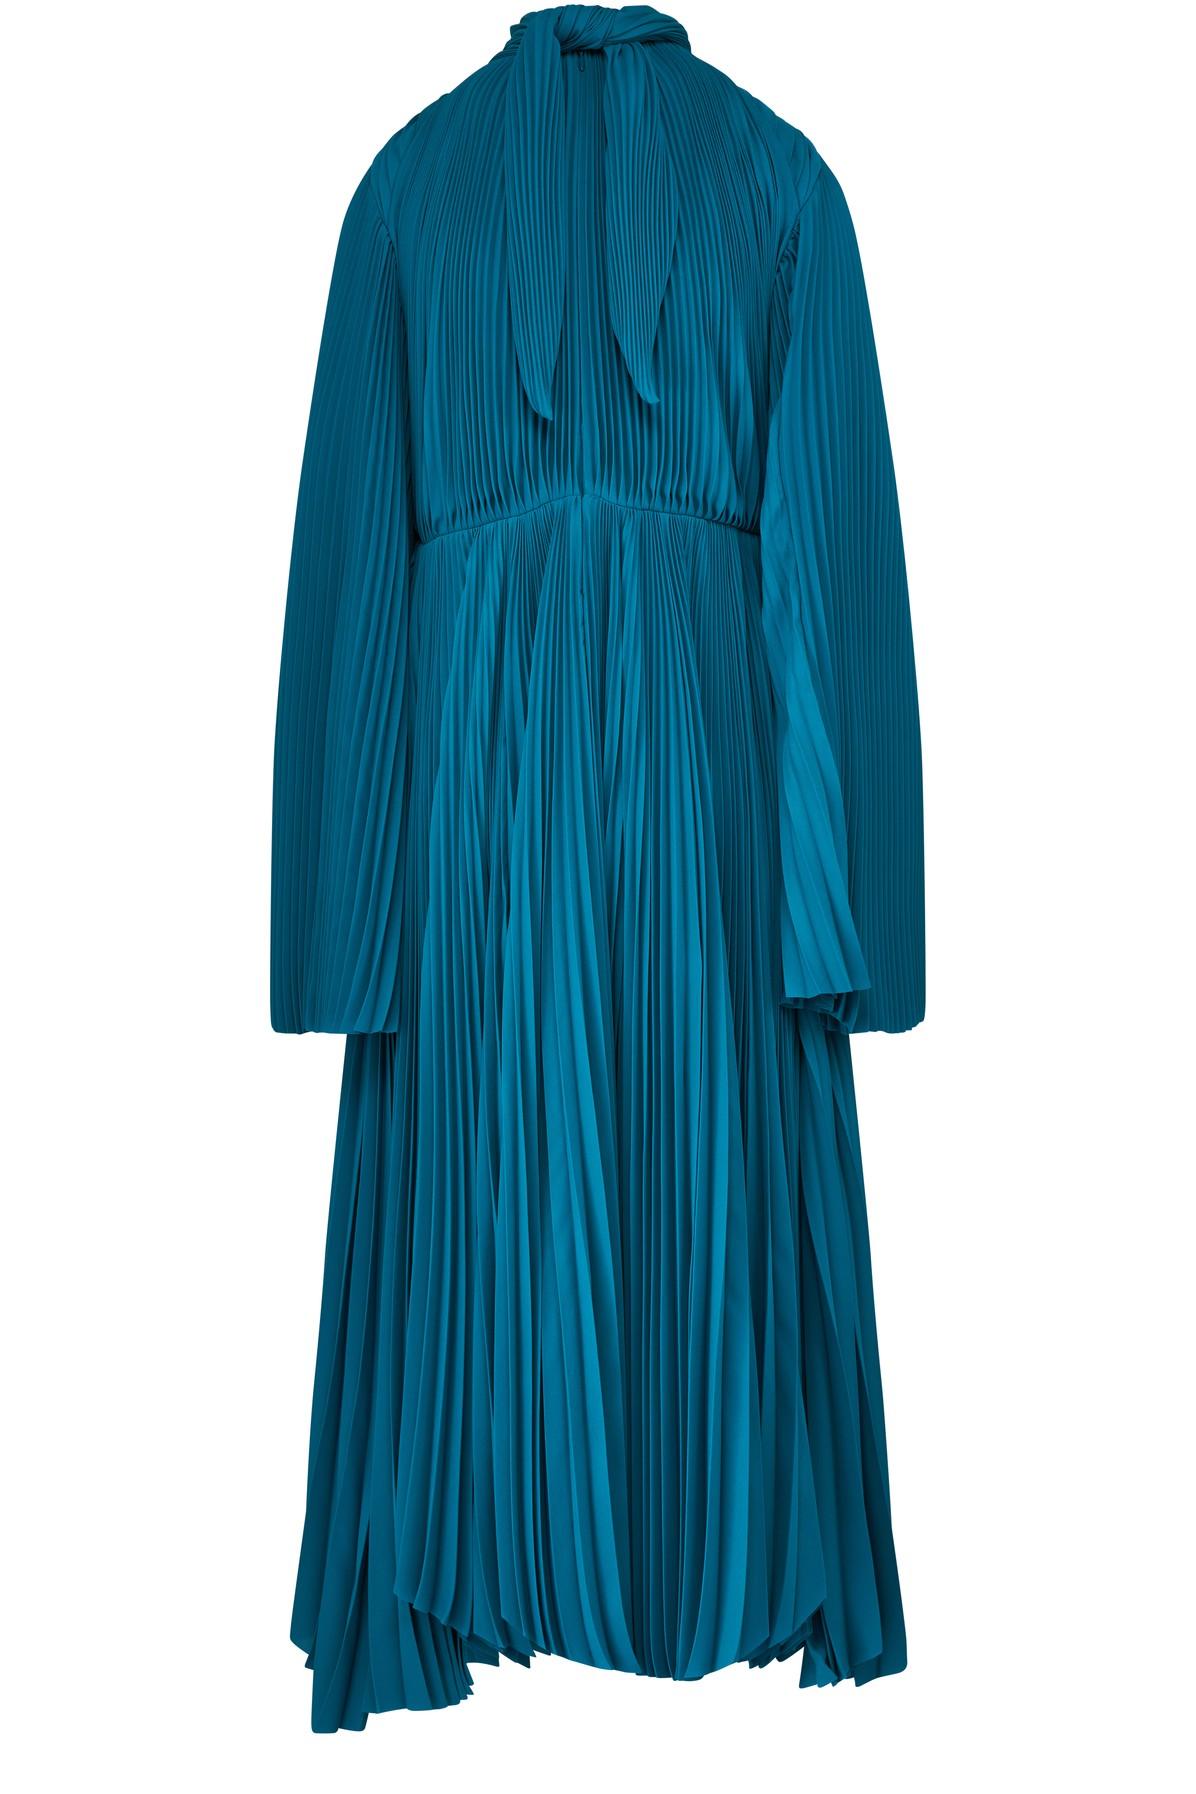 Balenciaga Knotted Drape Dress in Blue | Lyst